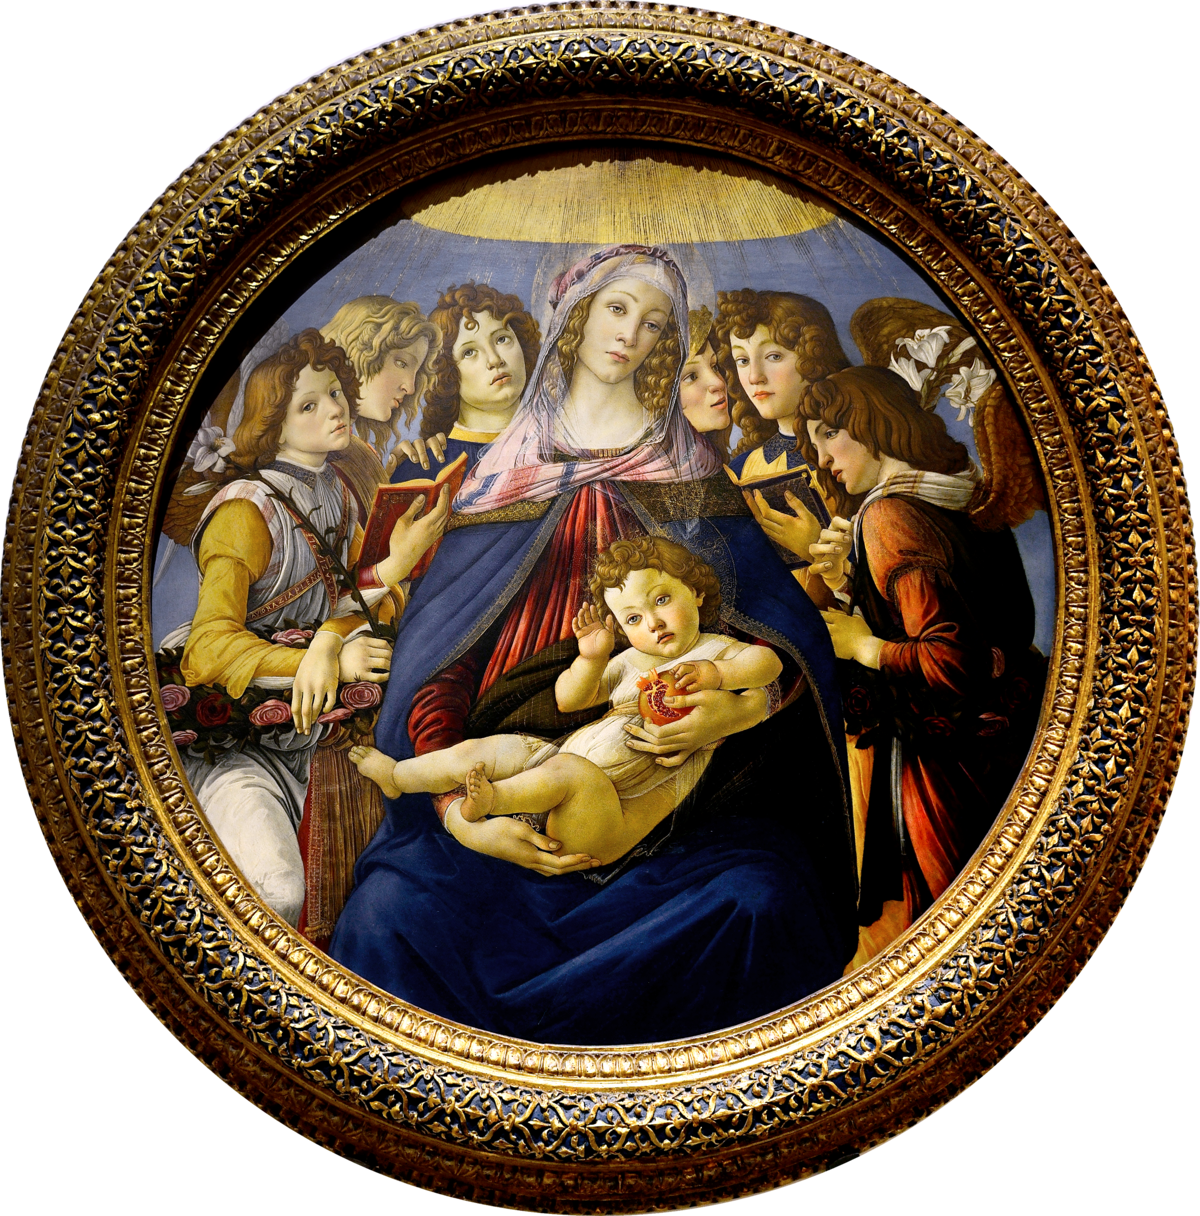 Madonna of the Pomegranate - Wikipedia